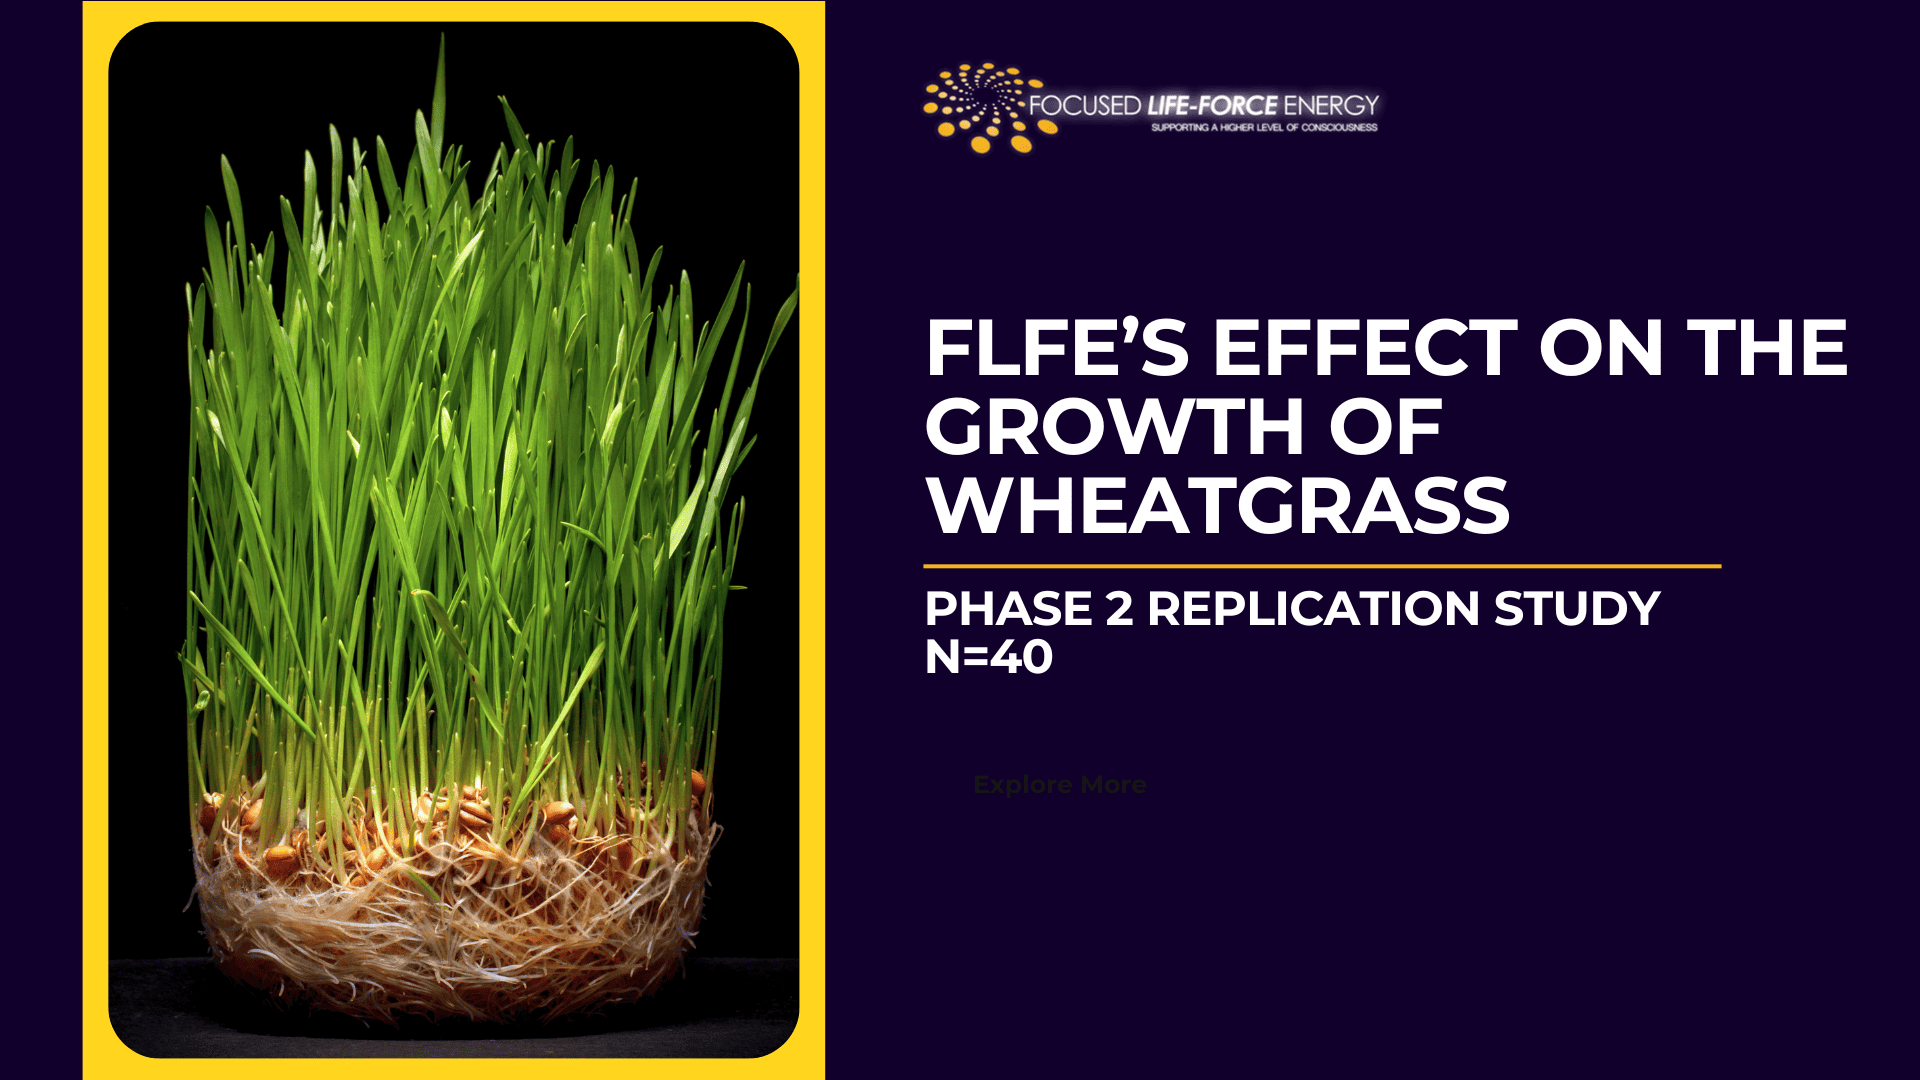 Wheatgrass plant research